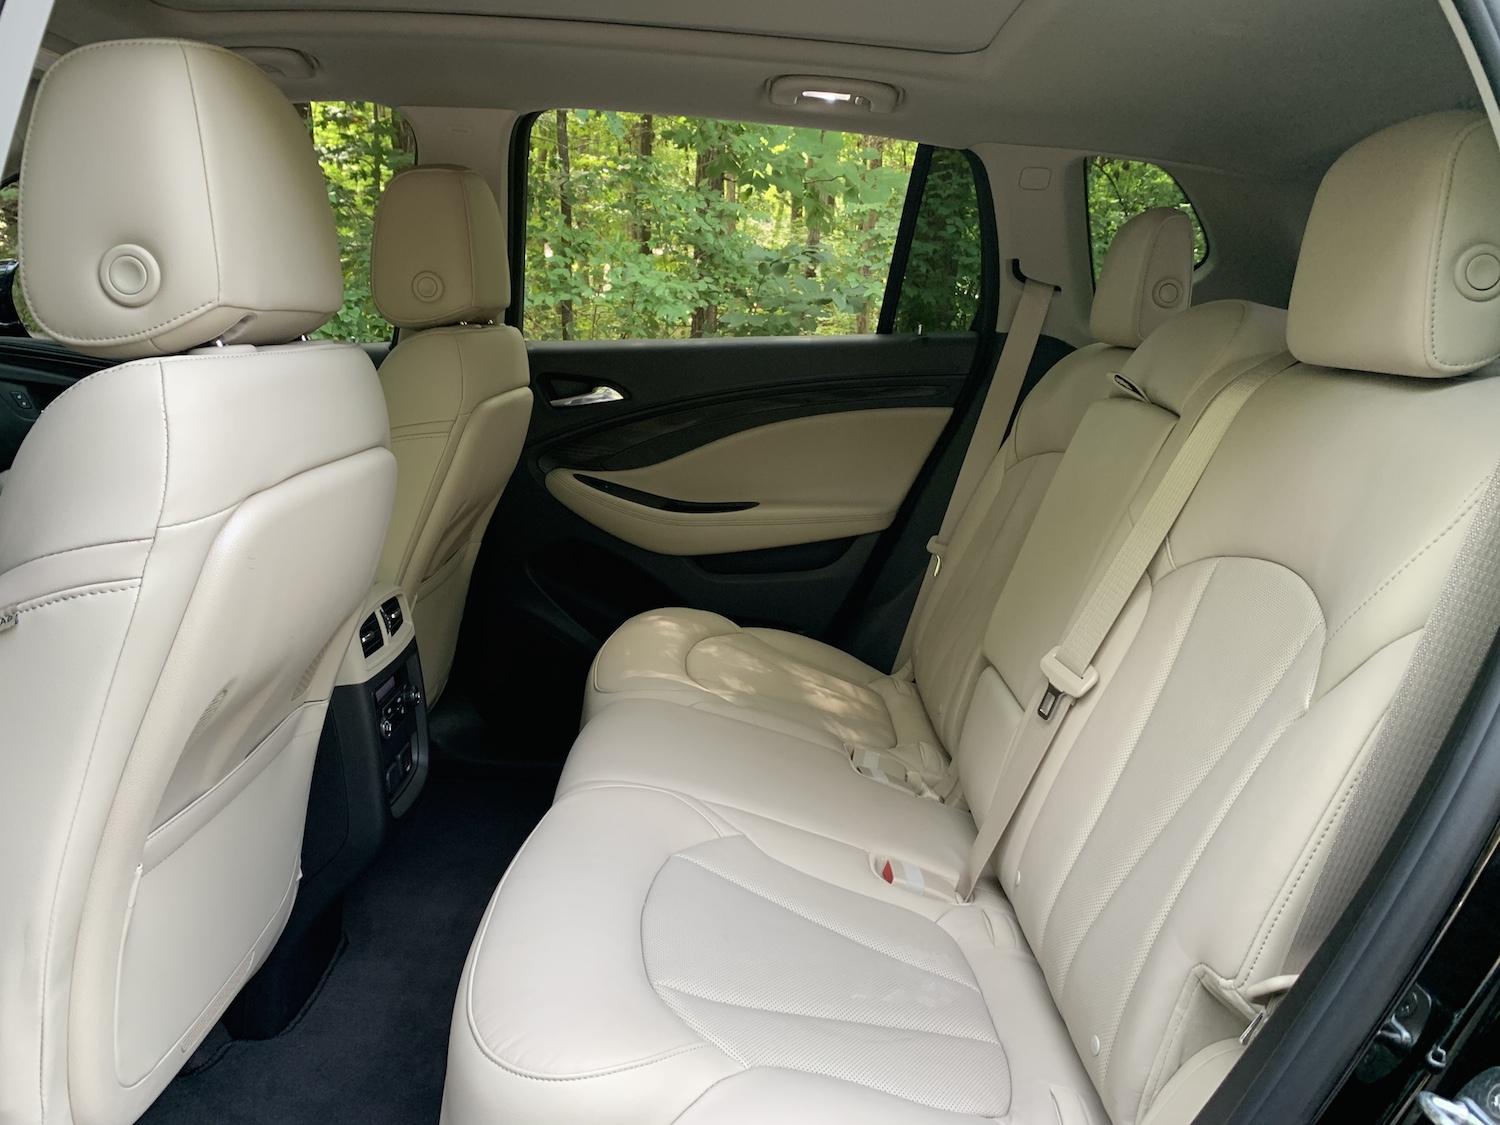 2019 Buick Envision rear seats